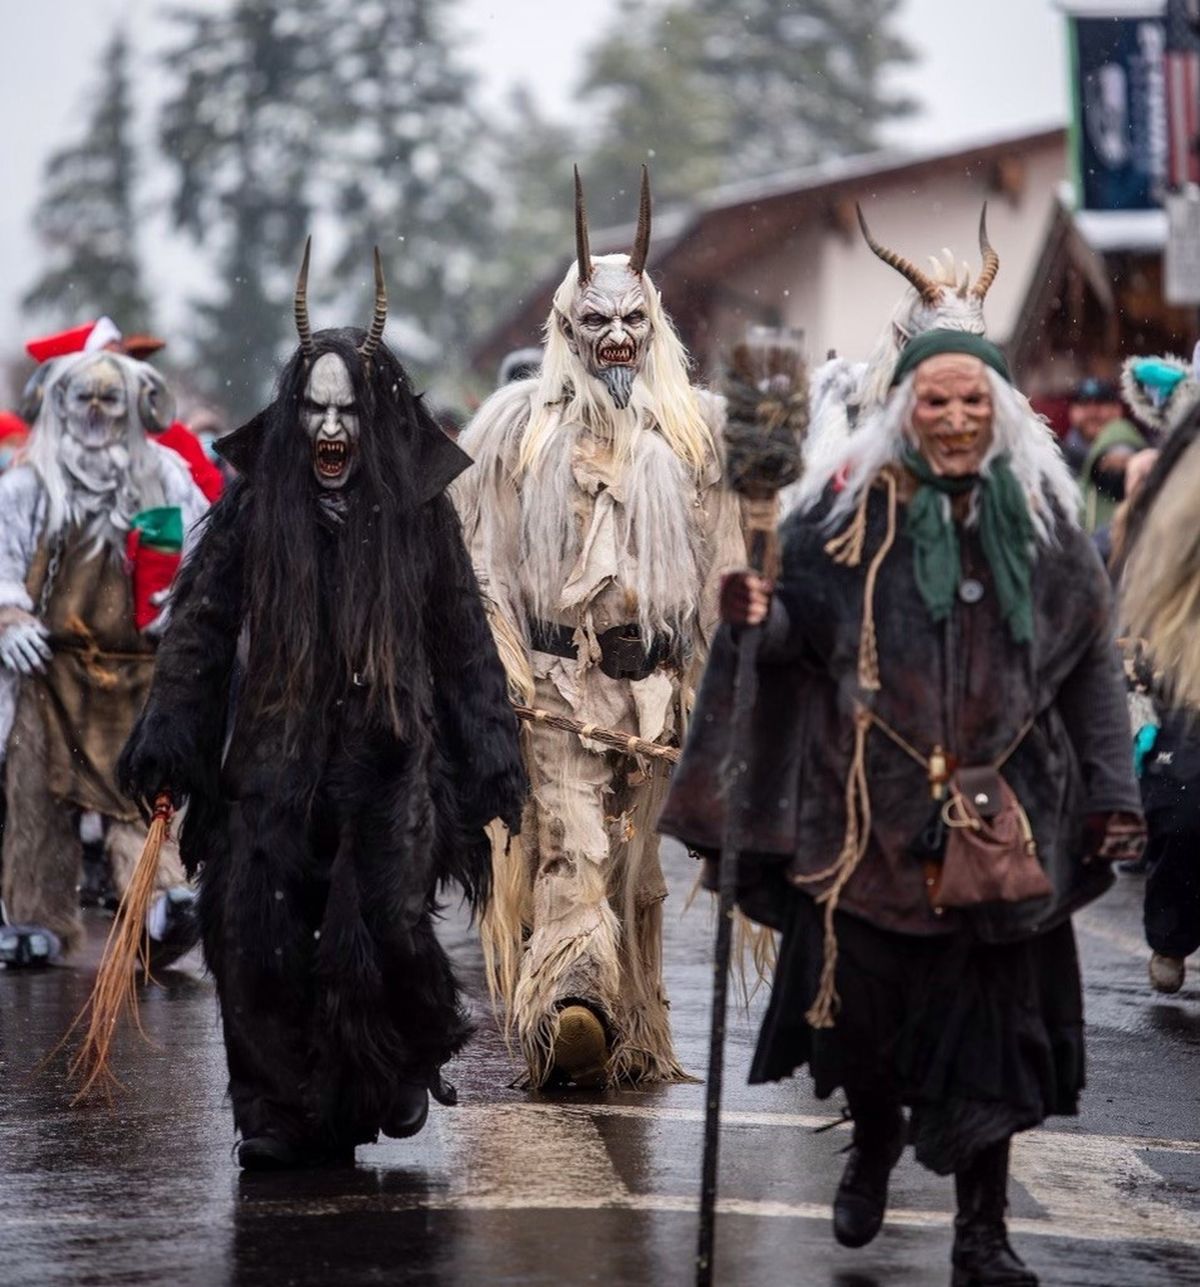 Christmas skirmish breaks out in Leavenworth over rebranding and